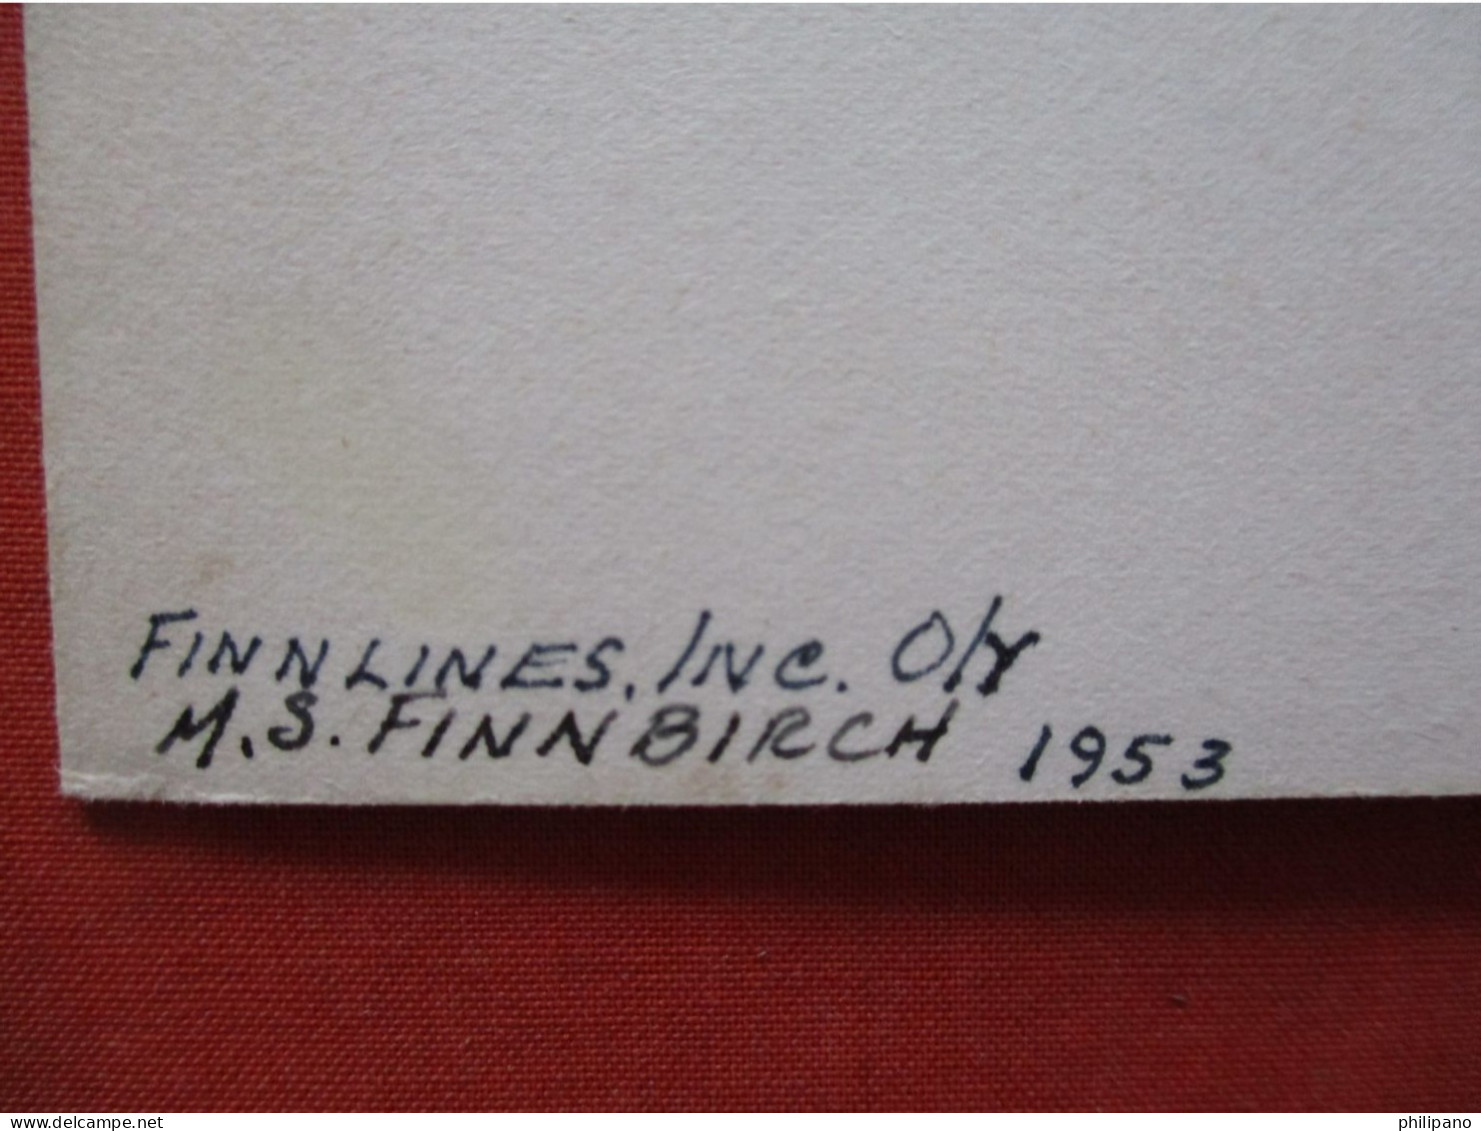 M.S.Finnbirch  Finn Lines   Ref 6409 - Dampfer